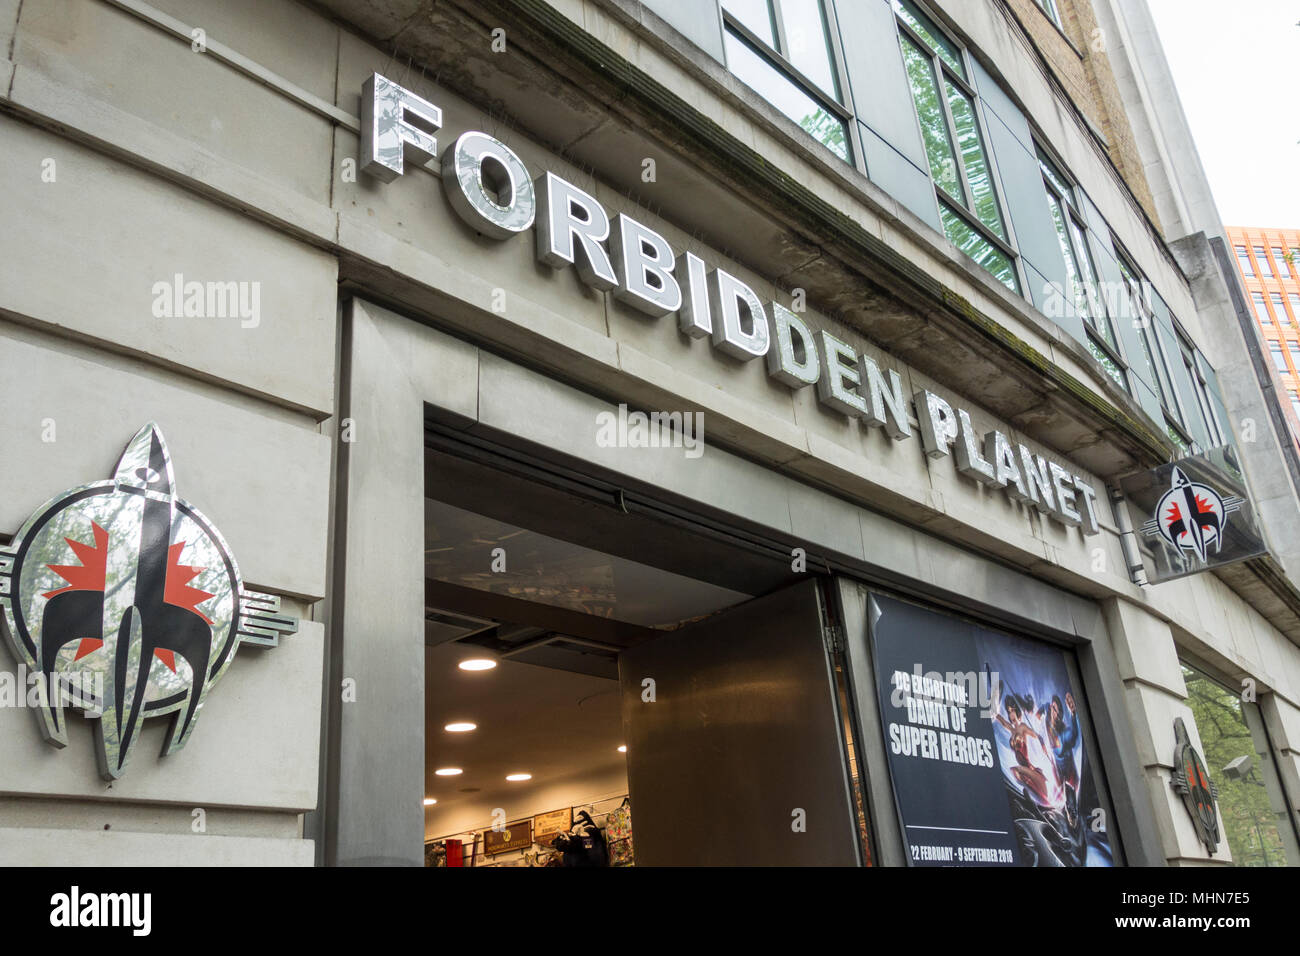 Forbidden Planet store on Shaftesbury Avenue, London, WC2, UK Stock Photo